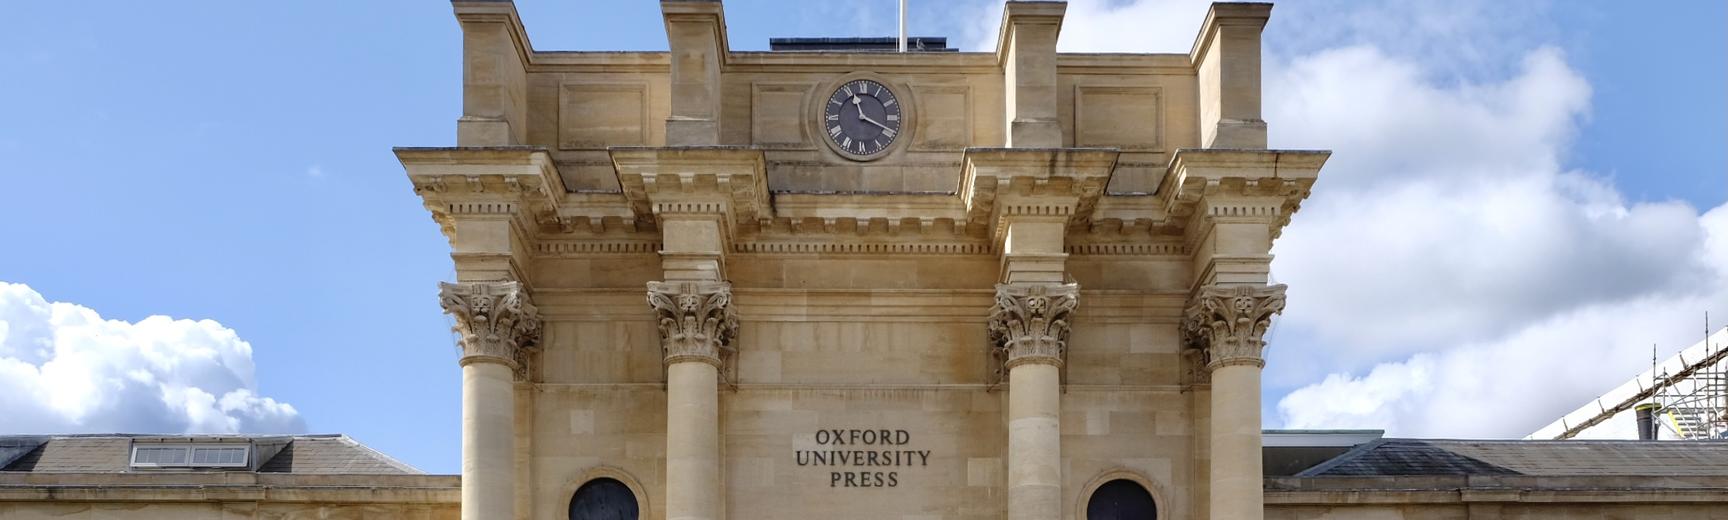 Oxford University Press front